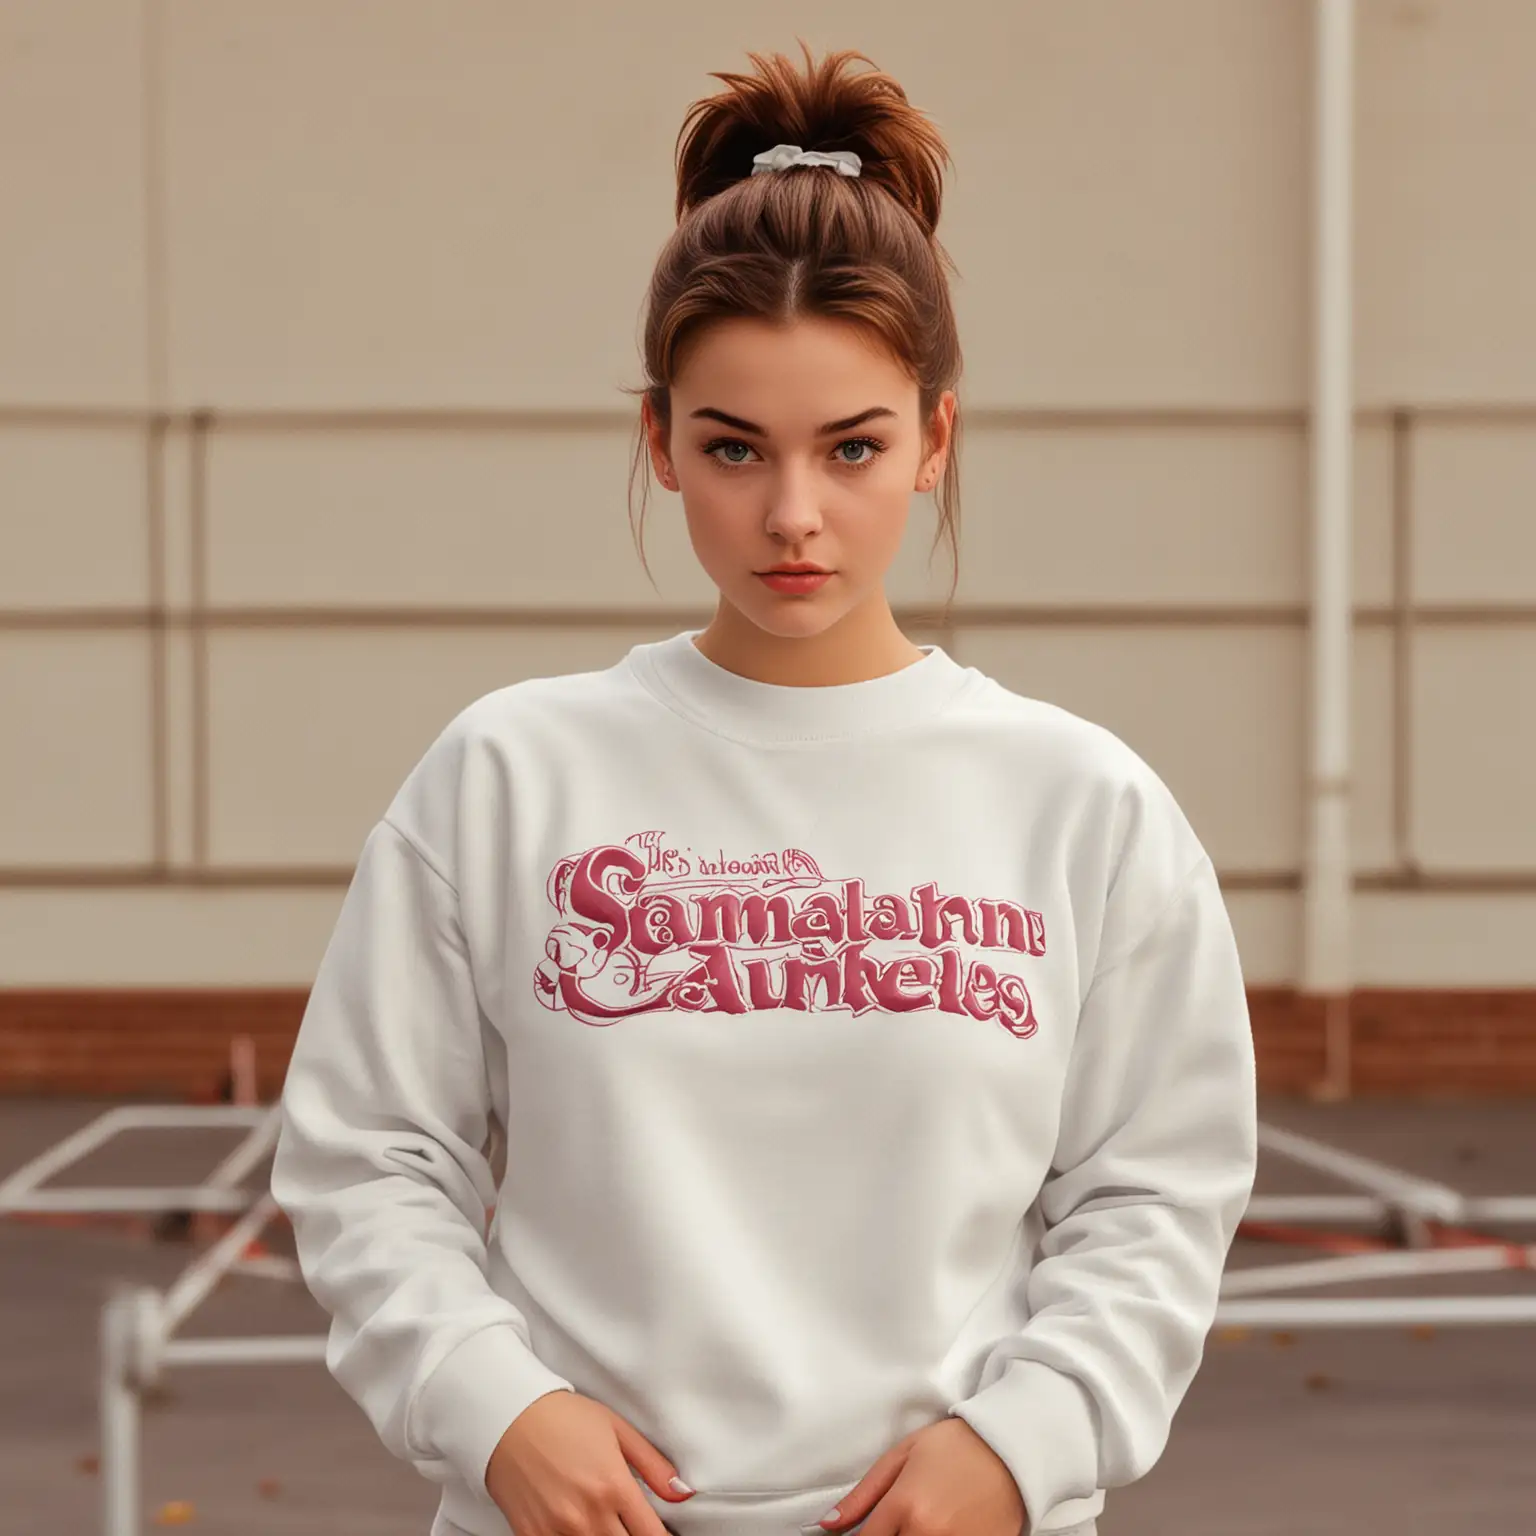 Teenage Girl in White Sweatshirt Embodying Samantha Baker Style High School Background